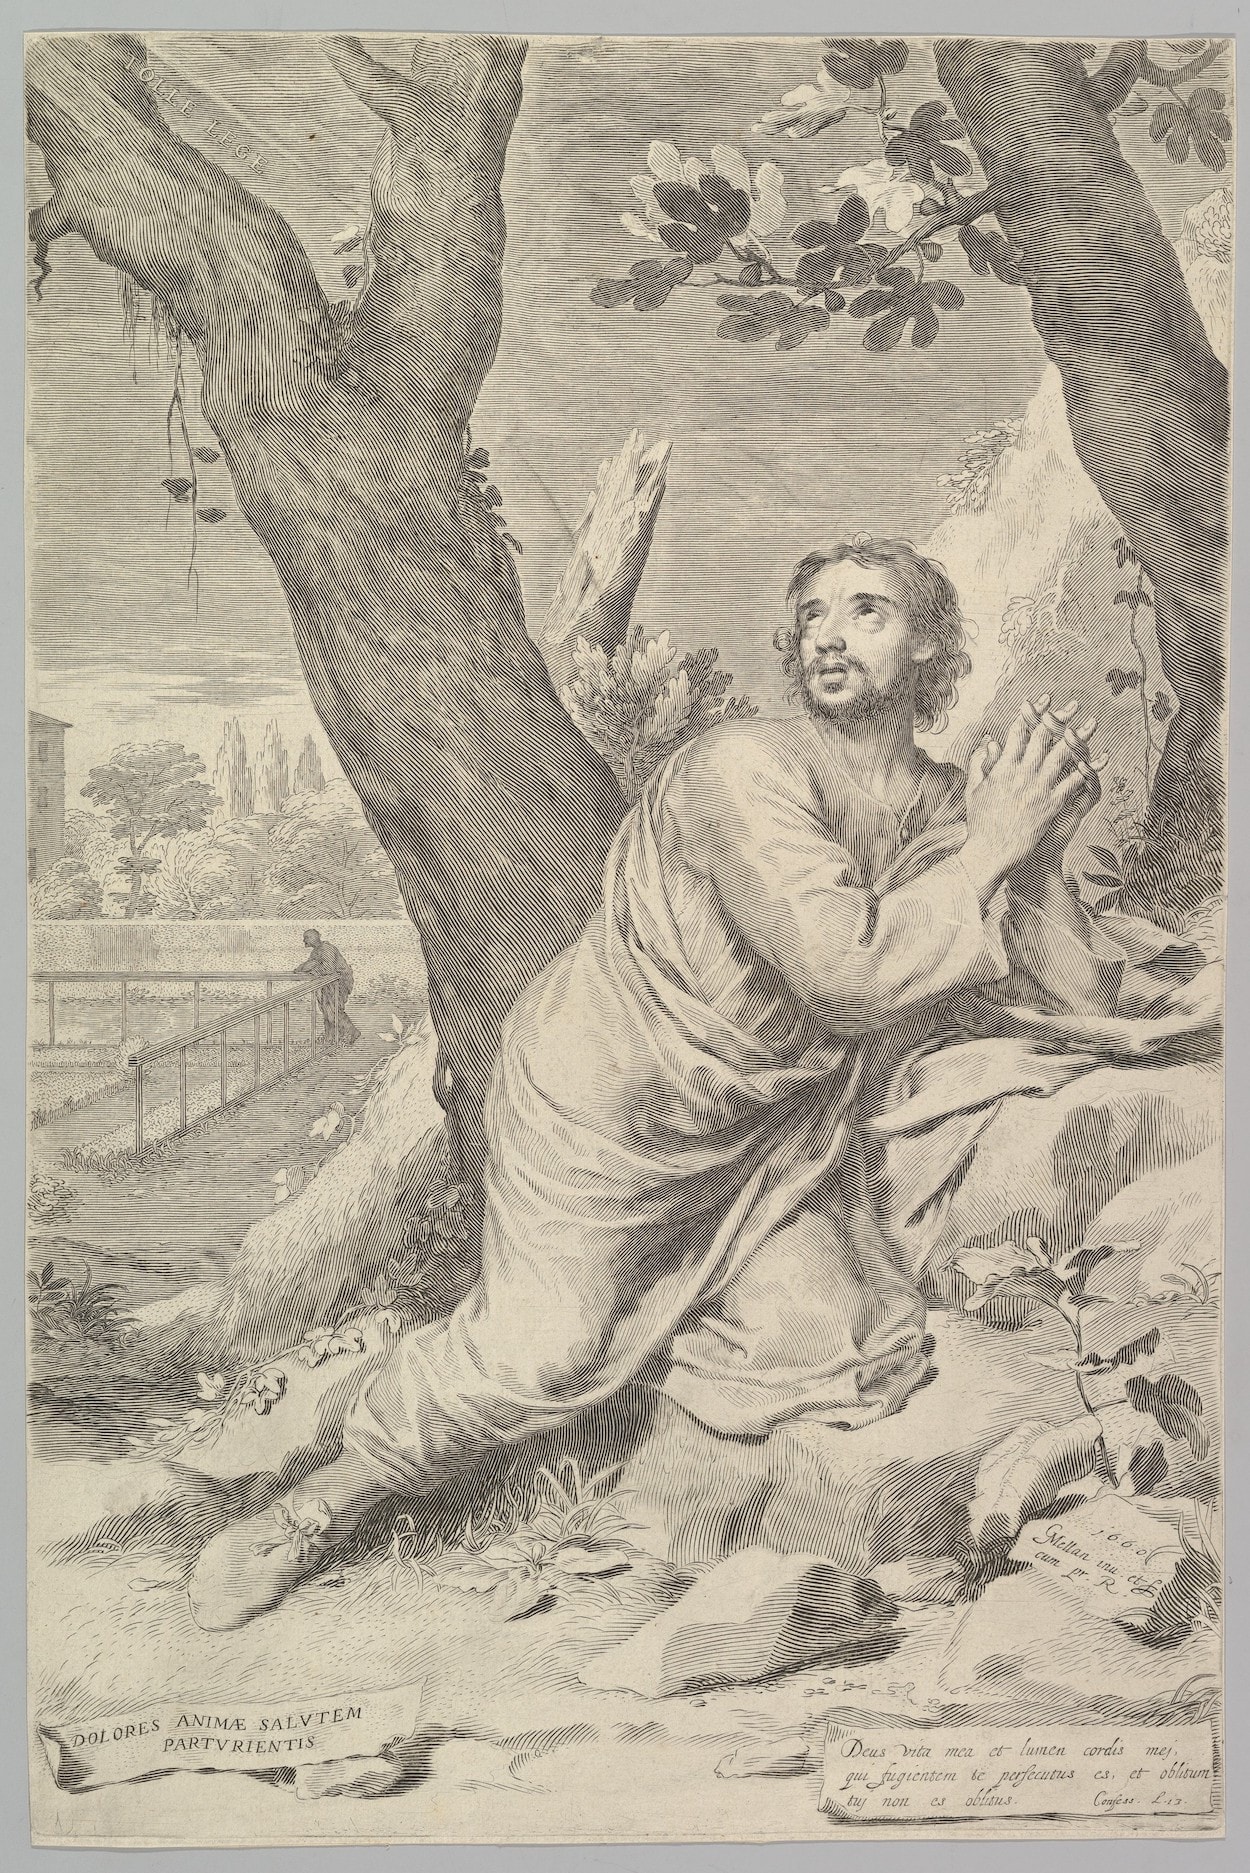 St. Augustine, 1660, Claude Mellan, The Metropolitan Museum of Art (article on interiority)